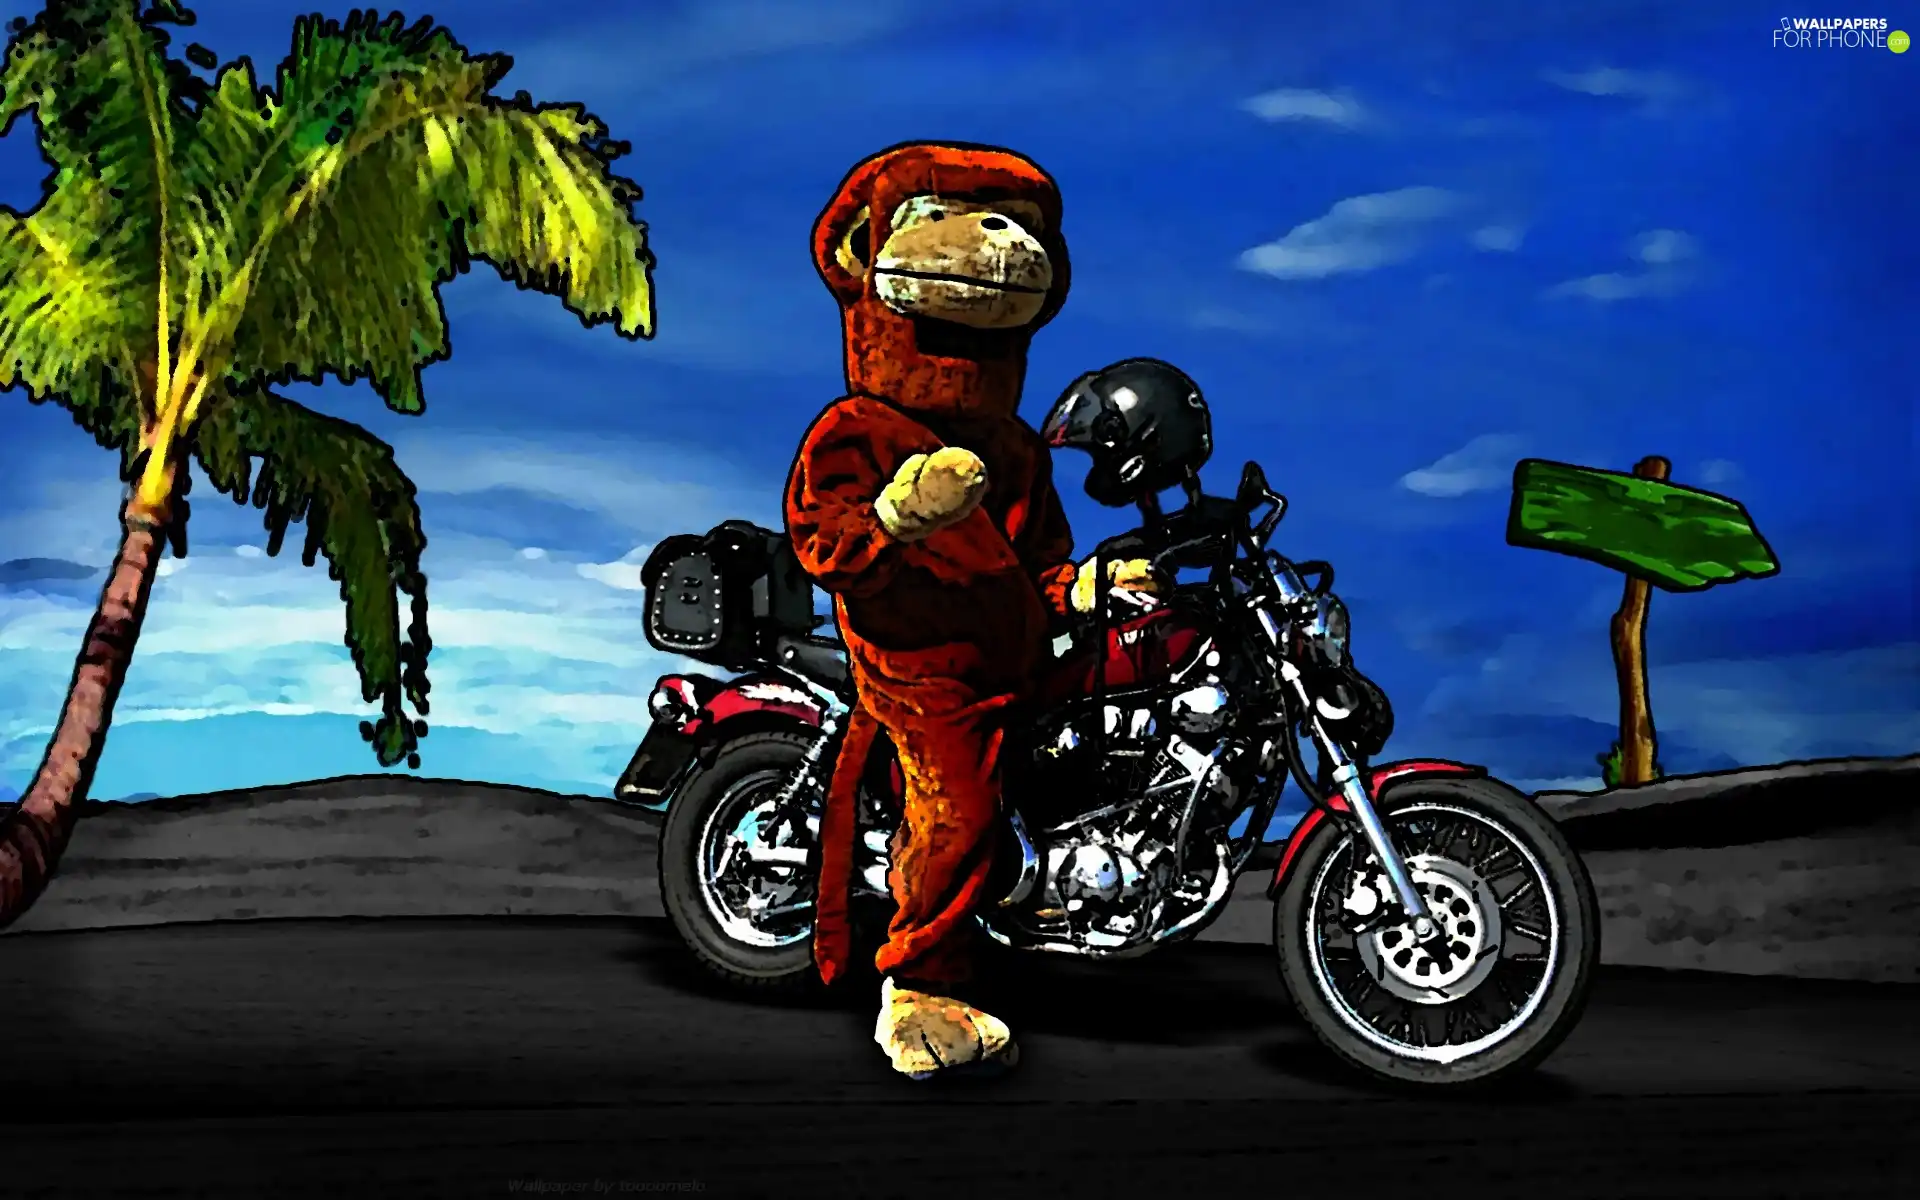 Monkey, on a motorcycle